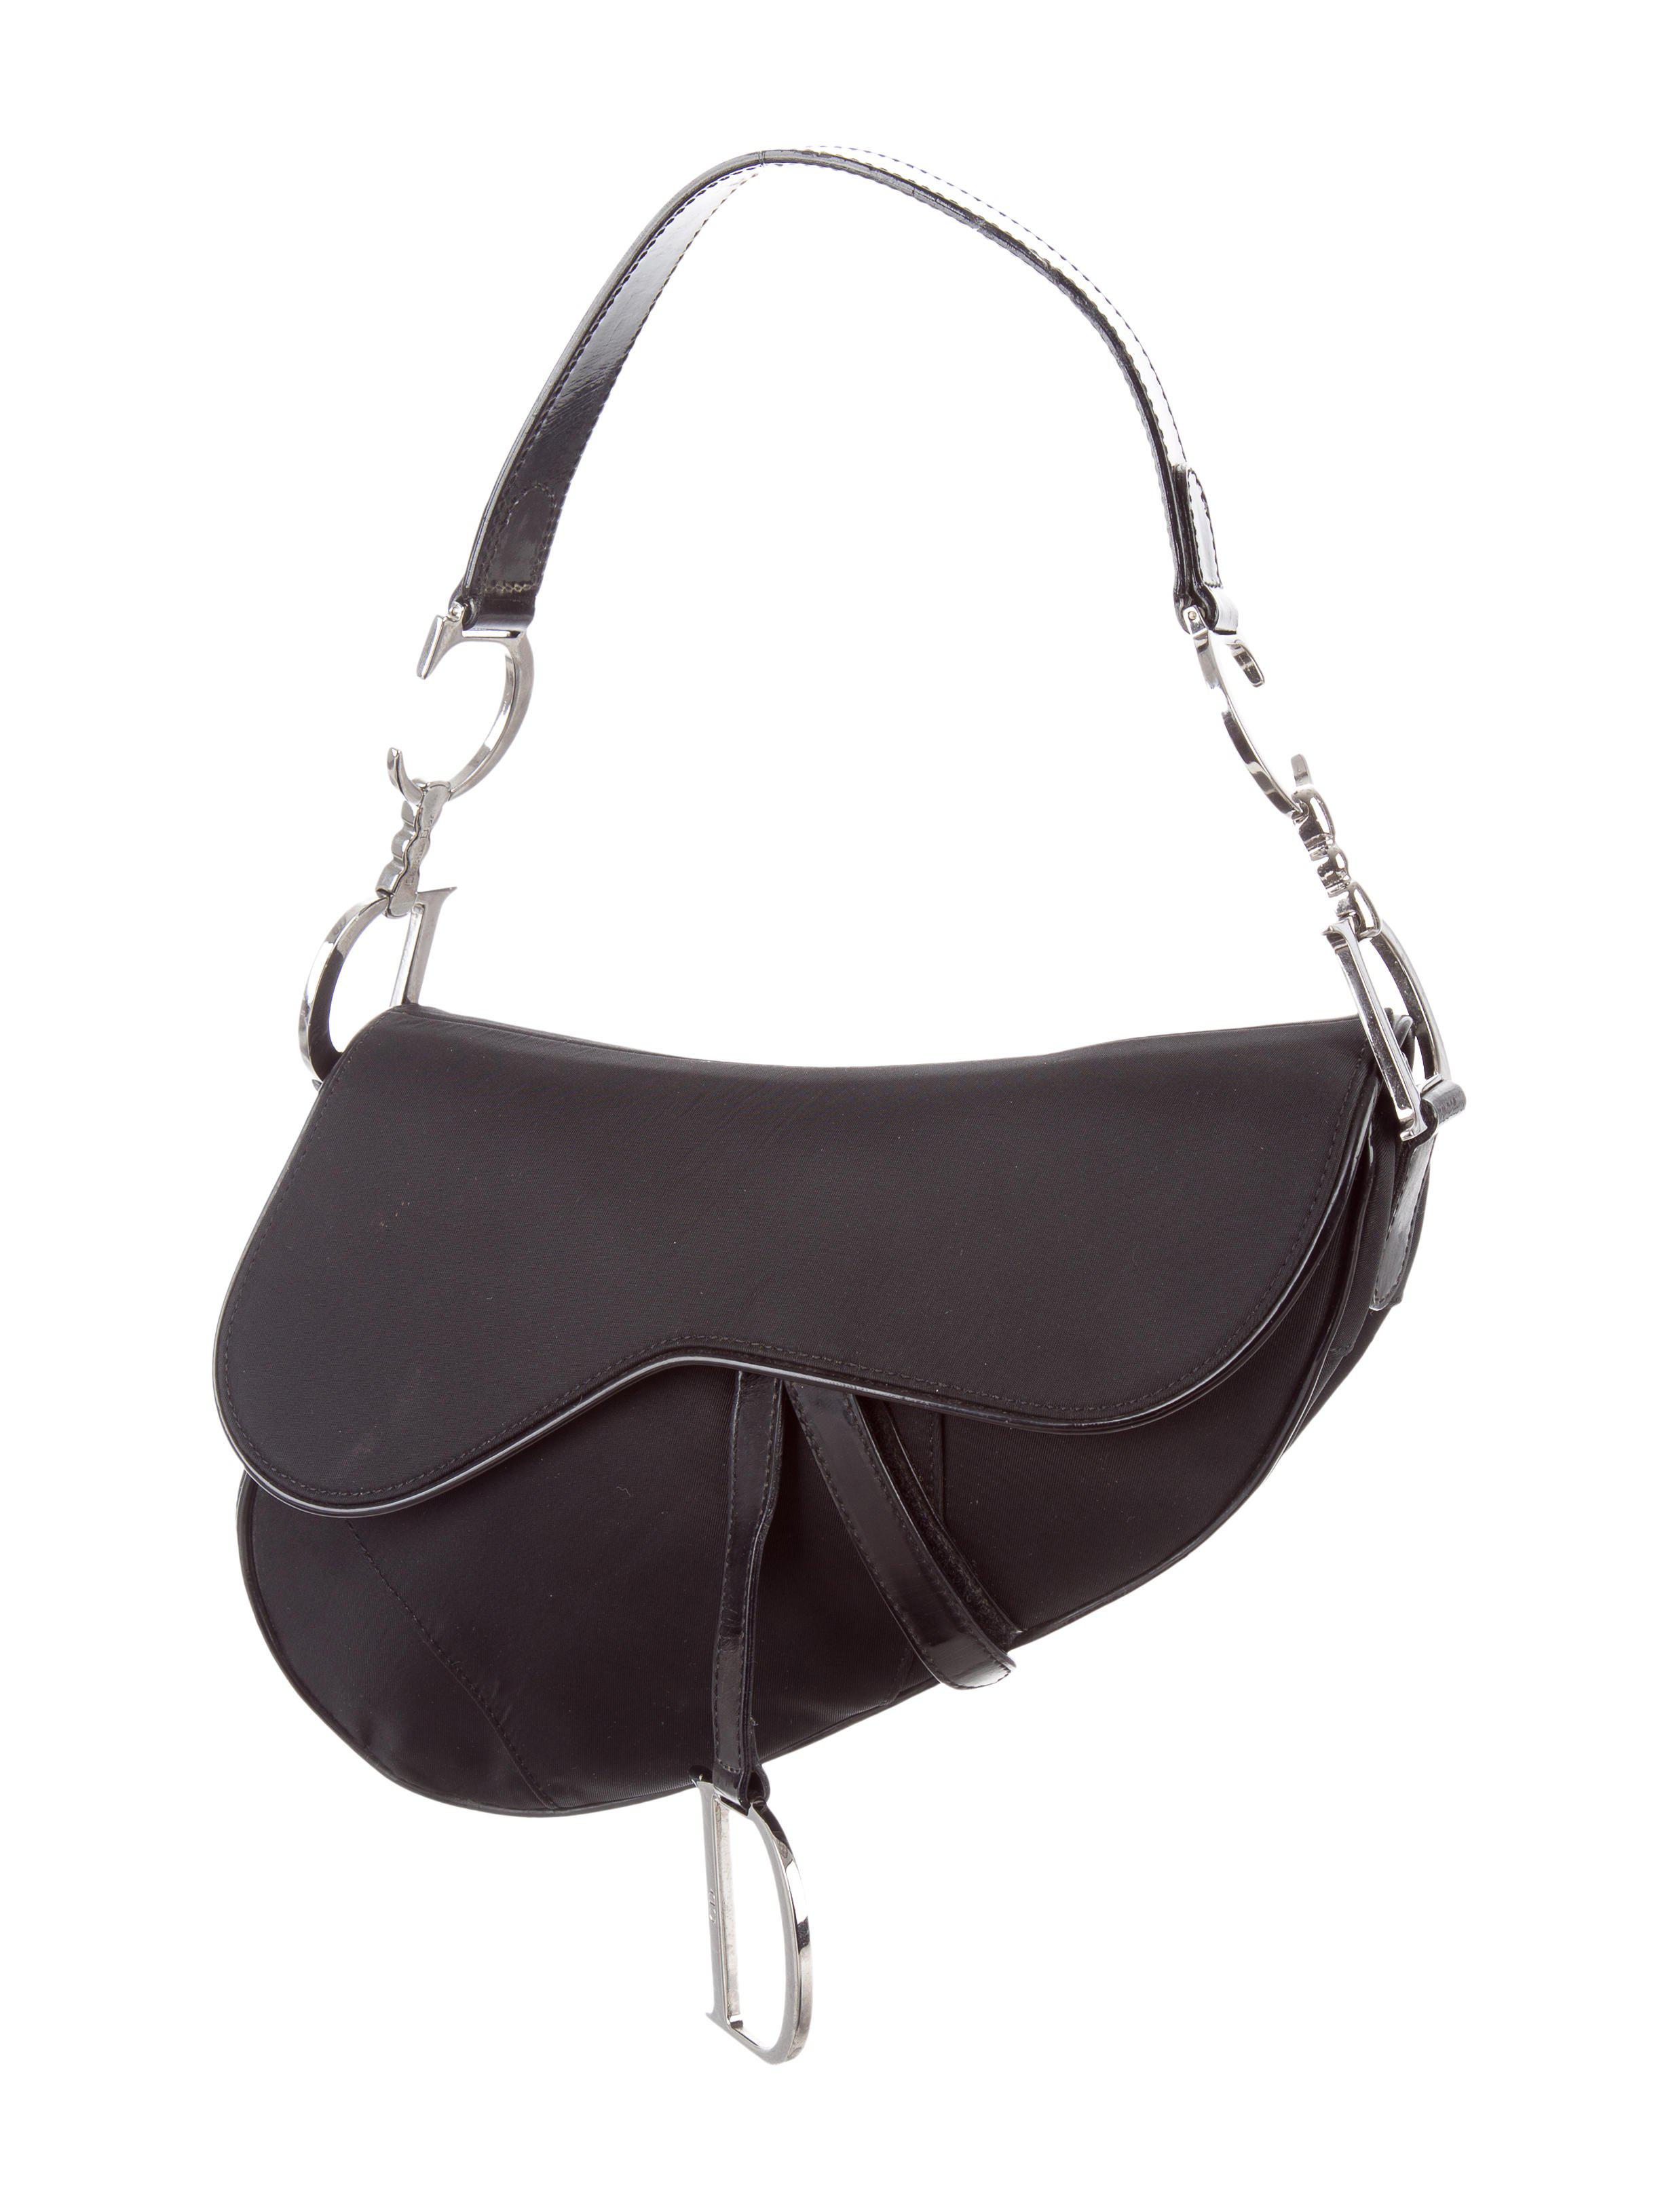 Lyst - Dior Nylon Saddle Bag Black in Metallic